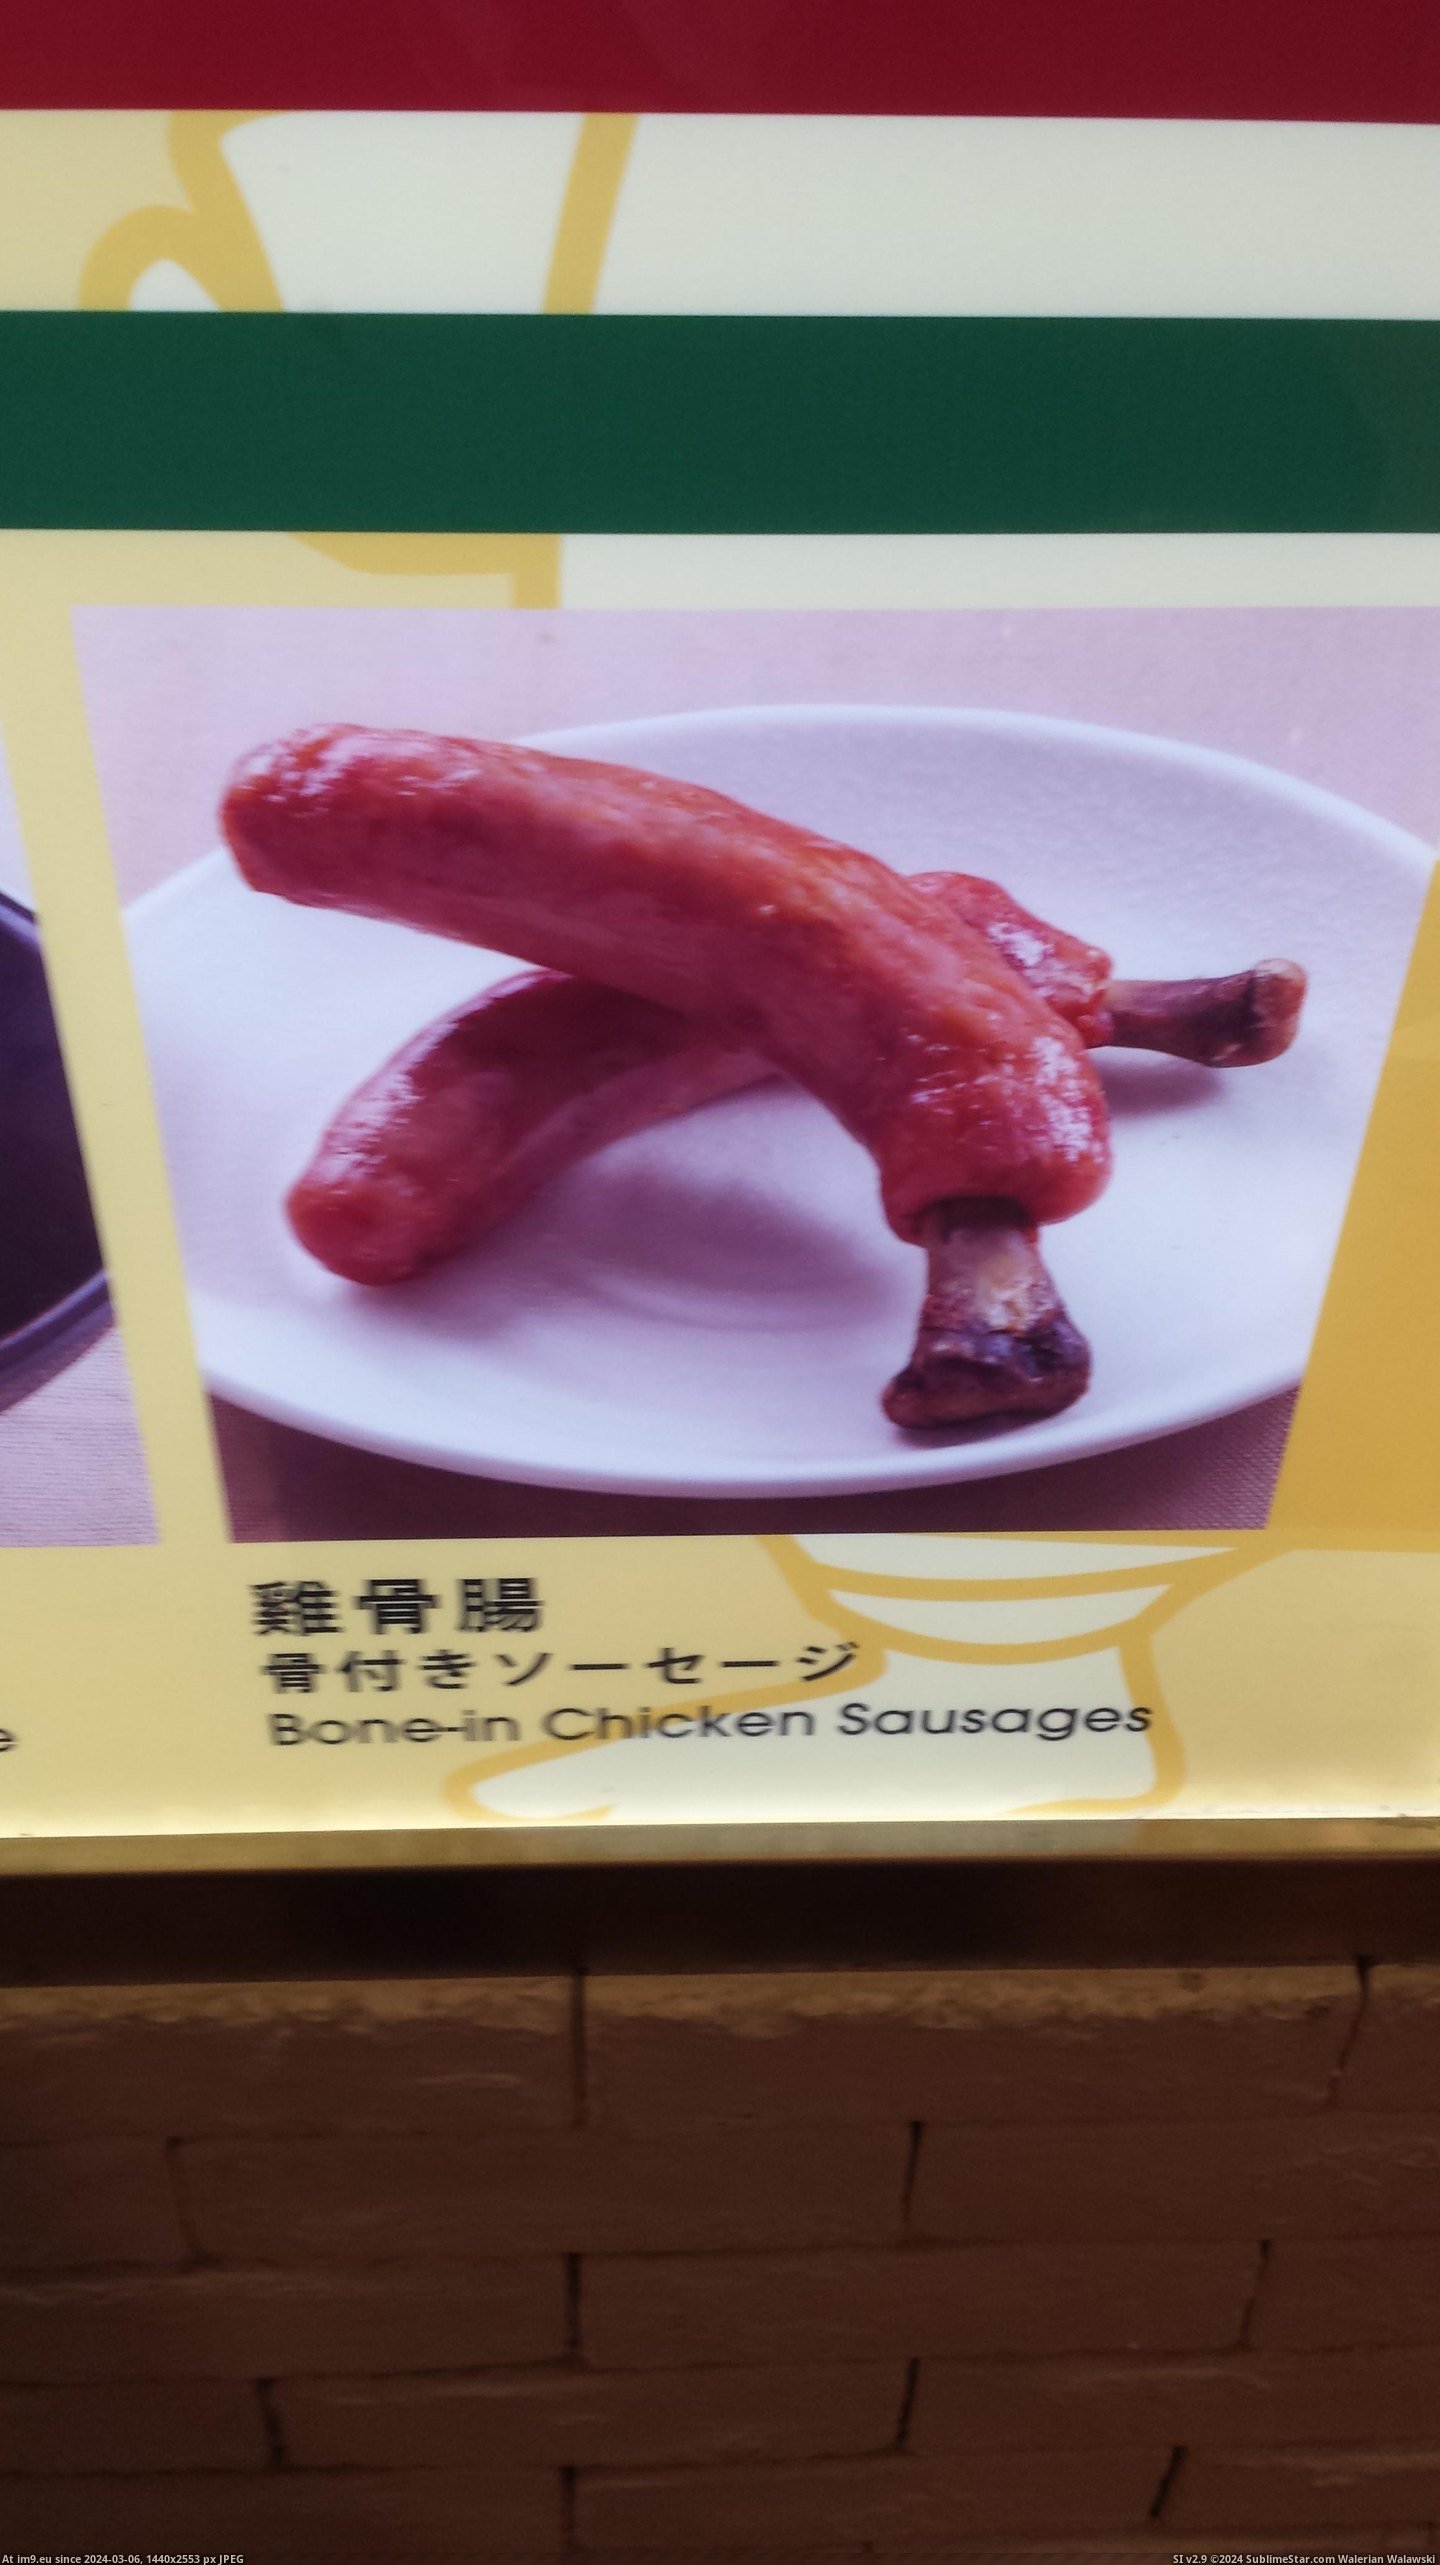 #Wtf #Bone #Sausages #Chicken [Wtf] 'Bone-in' chicken sausages Pic. (Изображение из альбом My r/WTF favs))